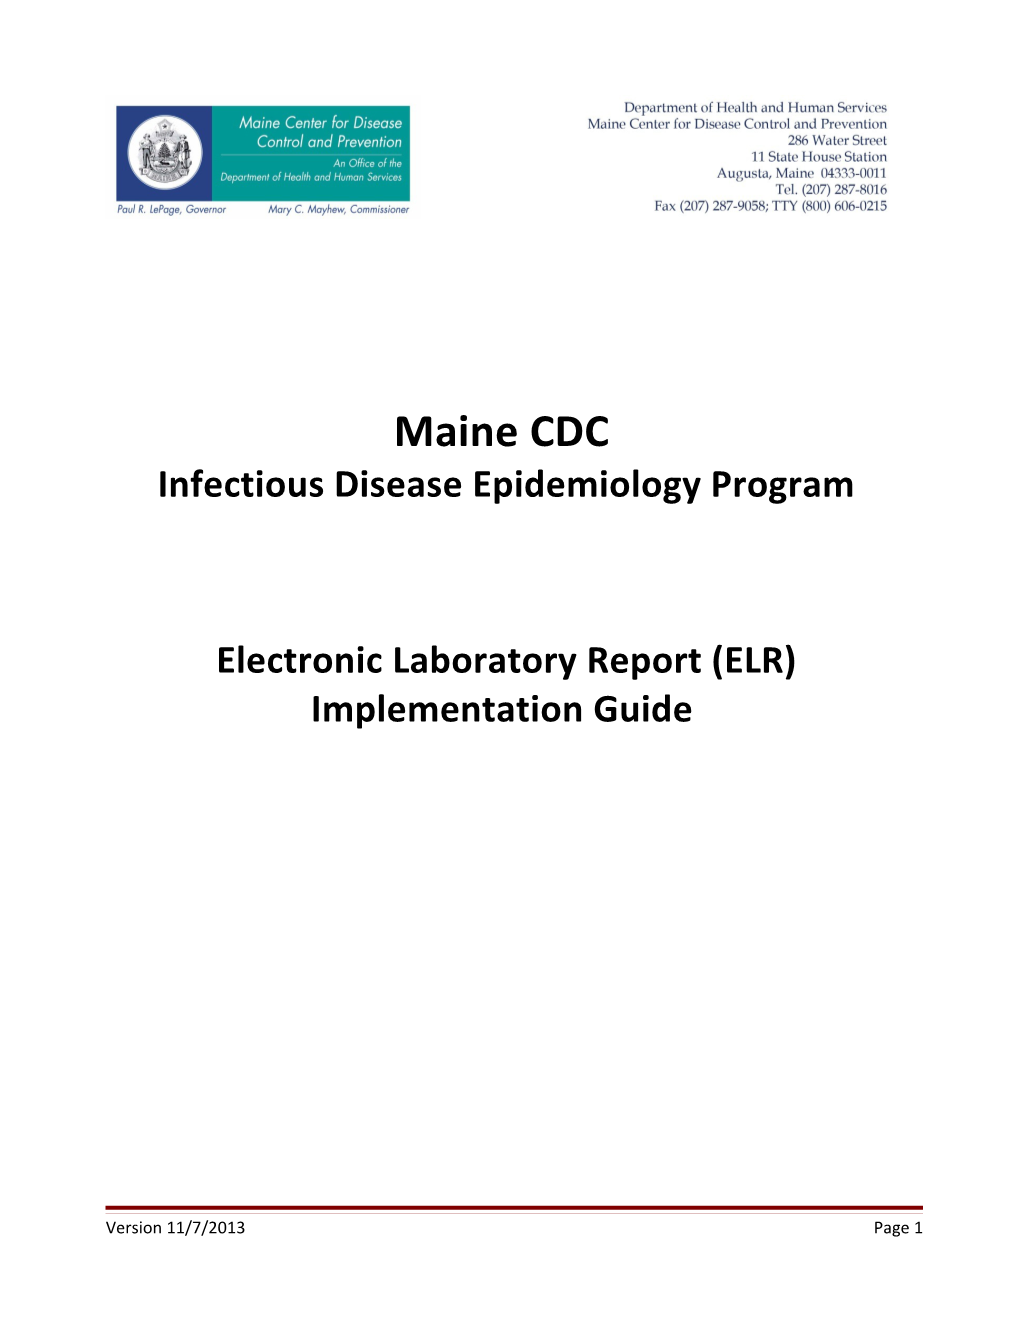 Infectious Disease Epidemiology Program